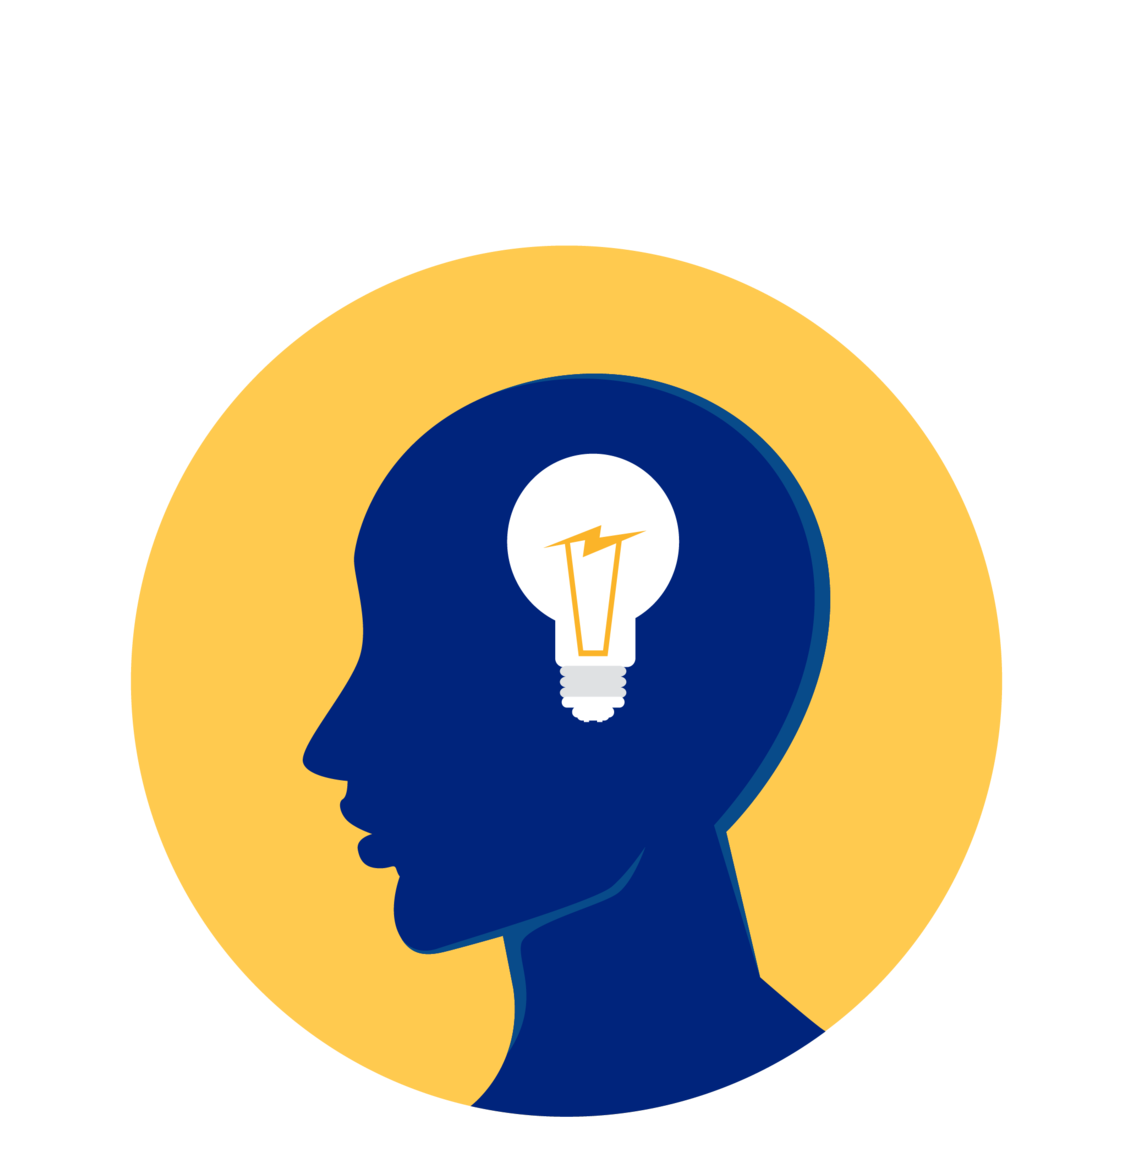 brainstorm logo